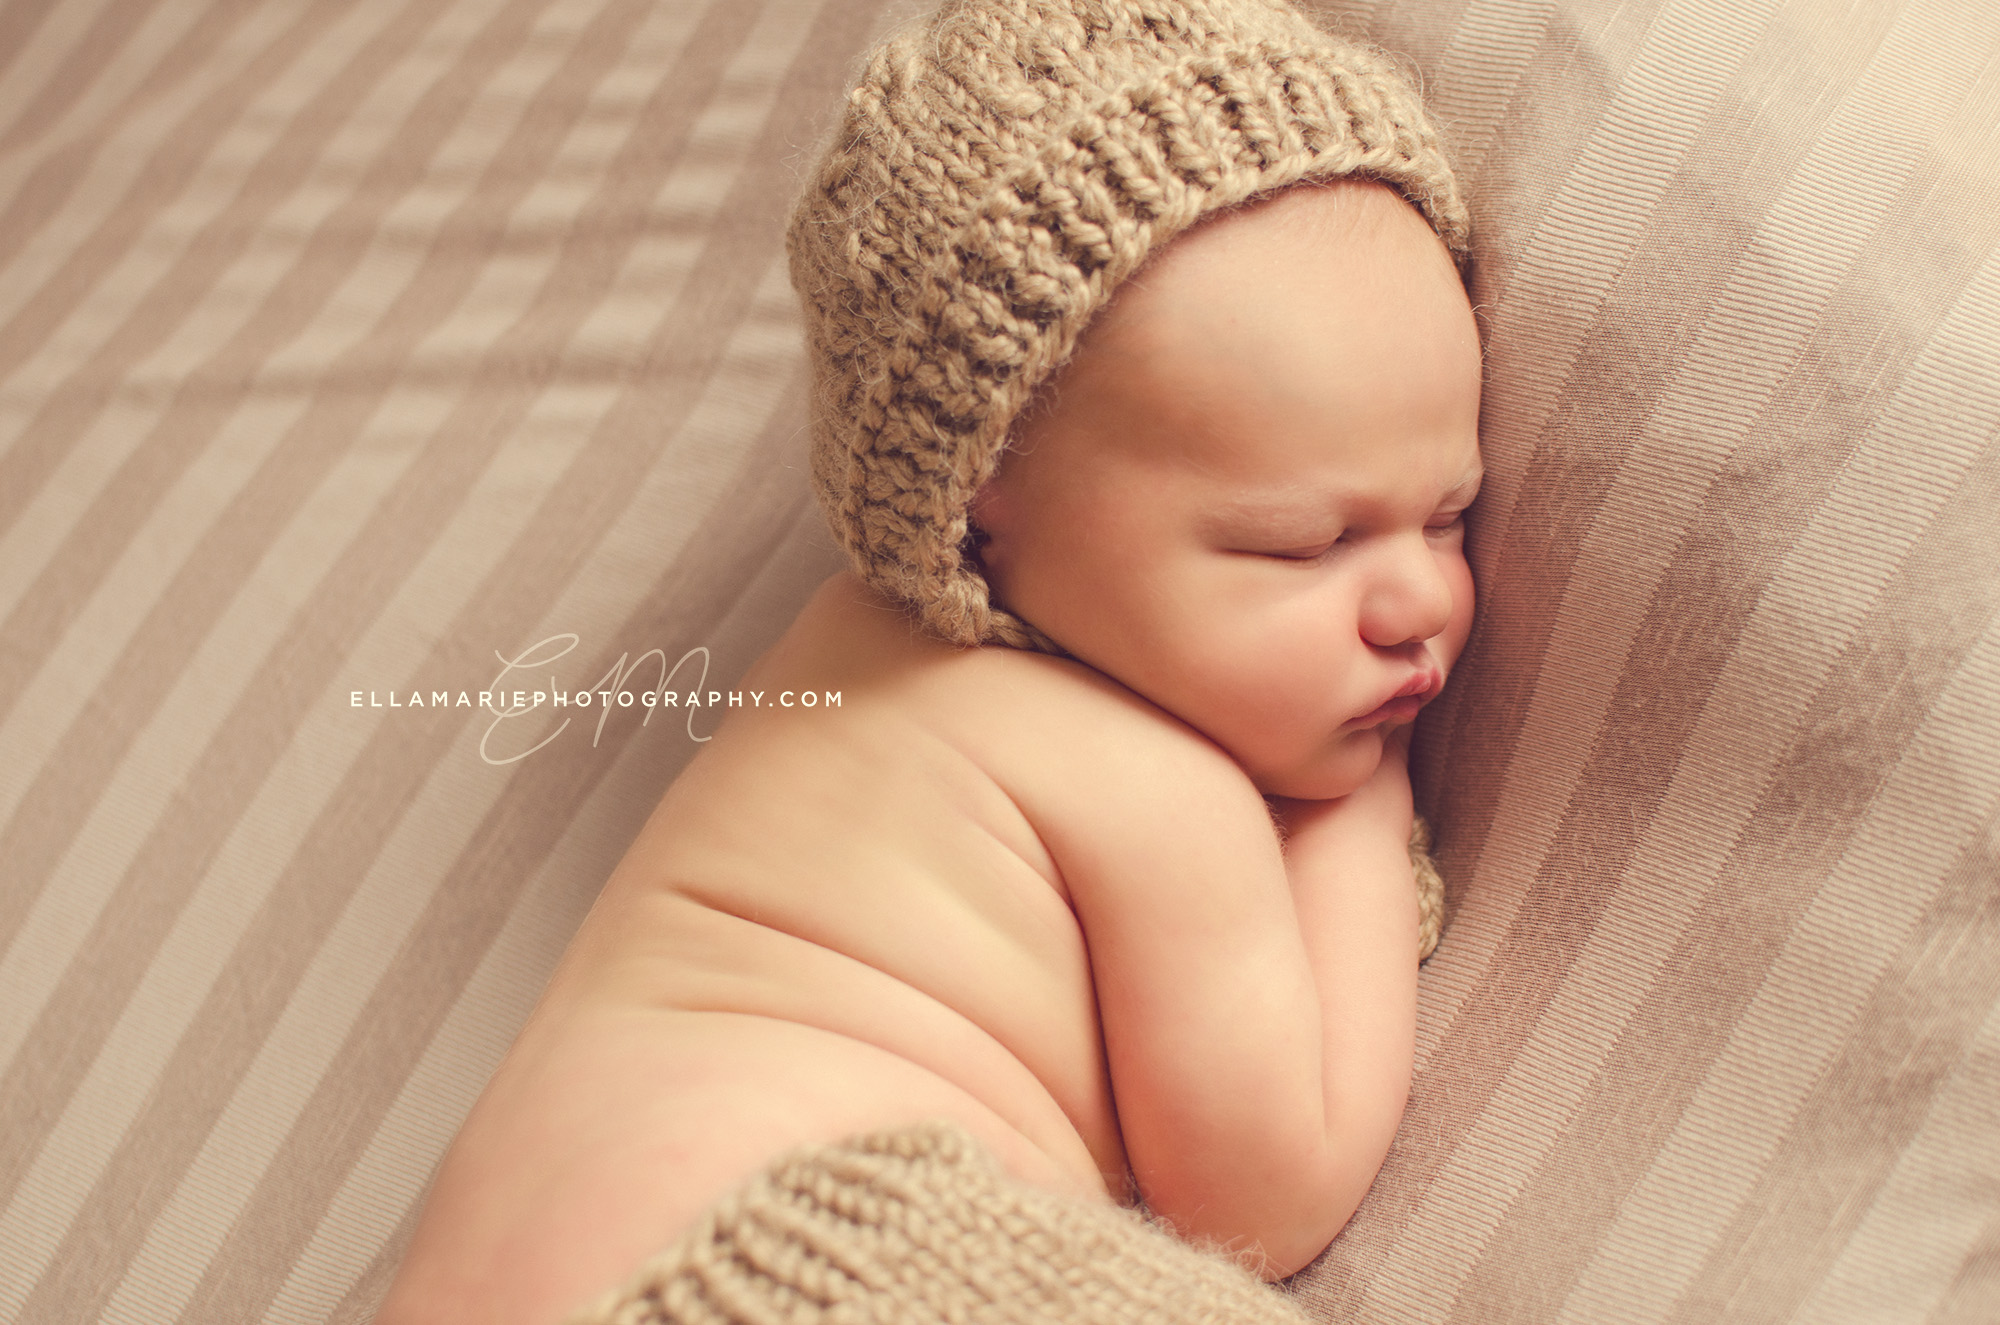 EllaMariePhotography_newborn_maternity_baby_infant_Baden_ON_New_Hamburg_Stratford_Waterloo_Kitchener_Guelph_Cambridge_Listowel_photographer_photography_05.jpg